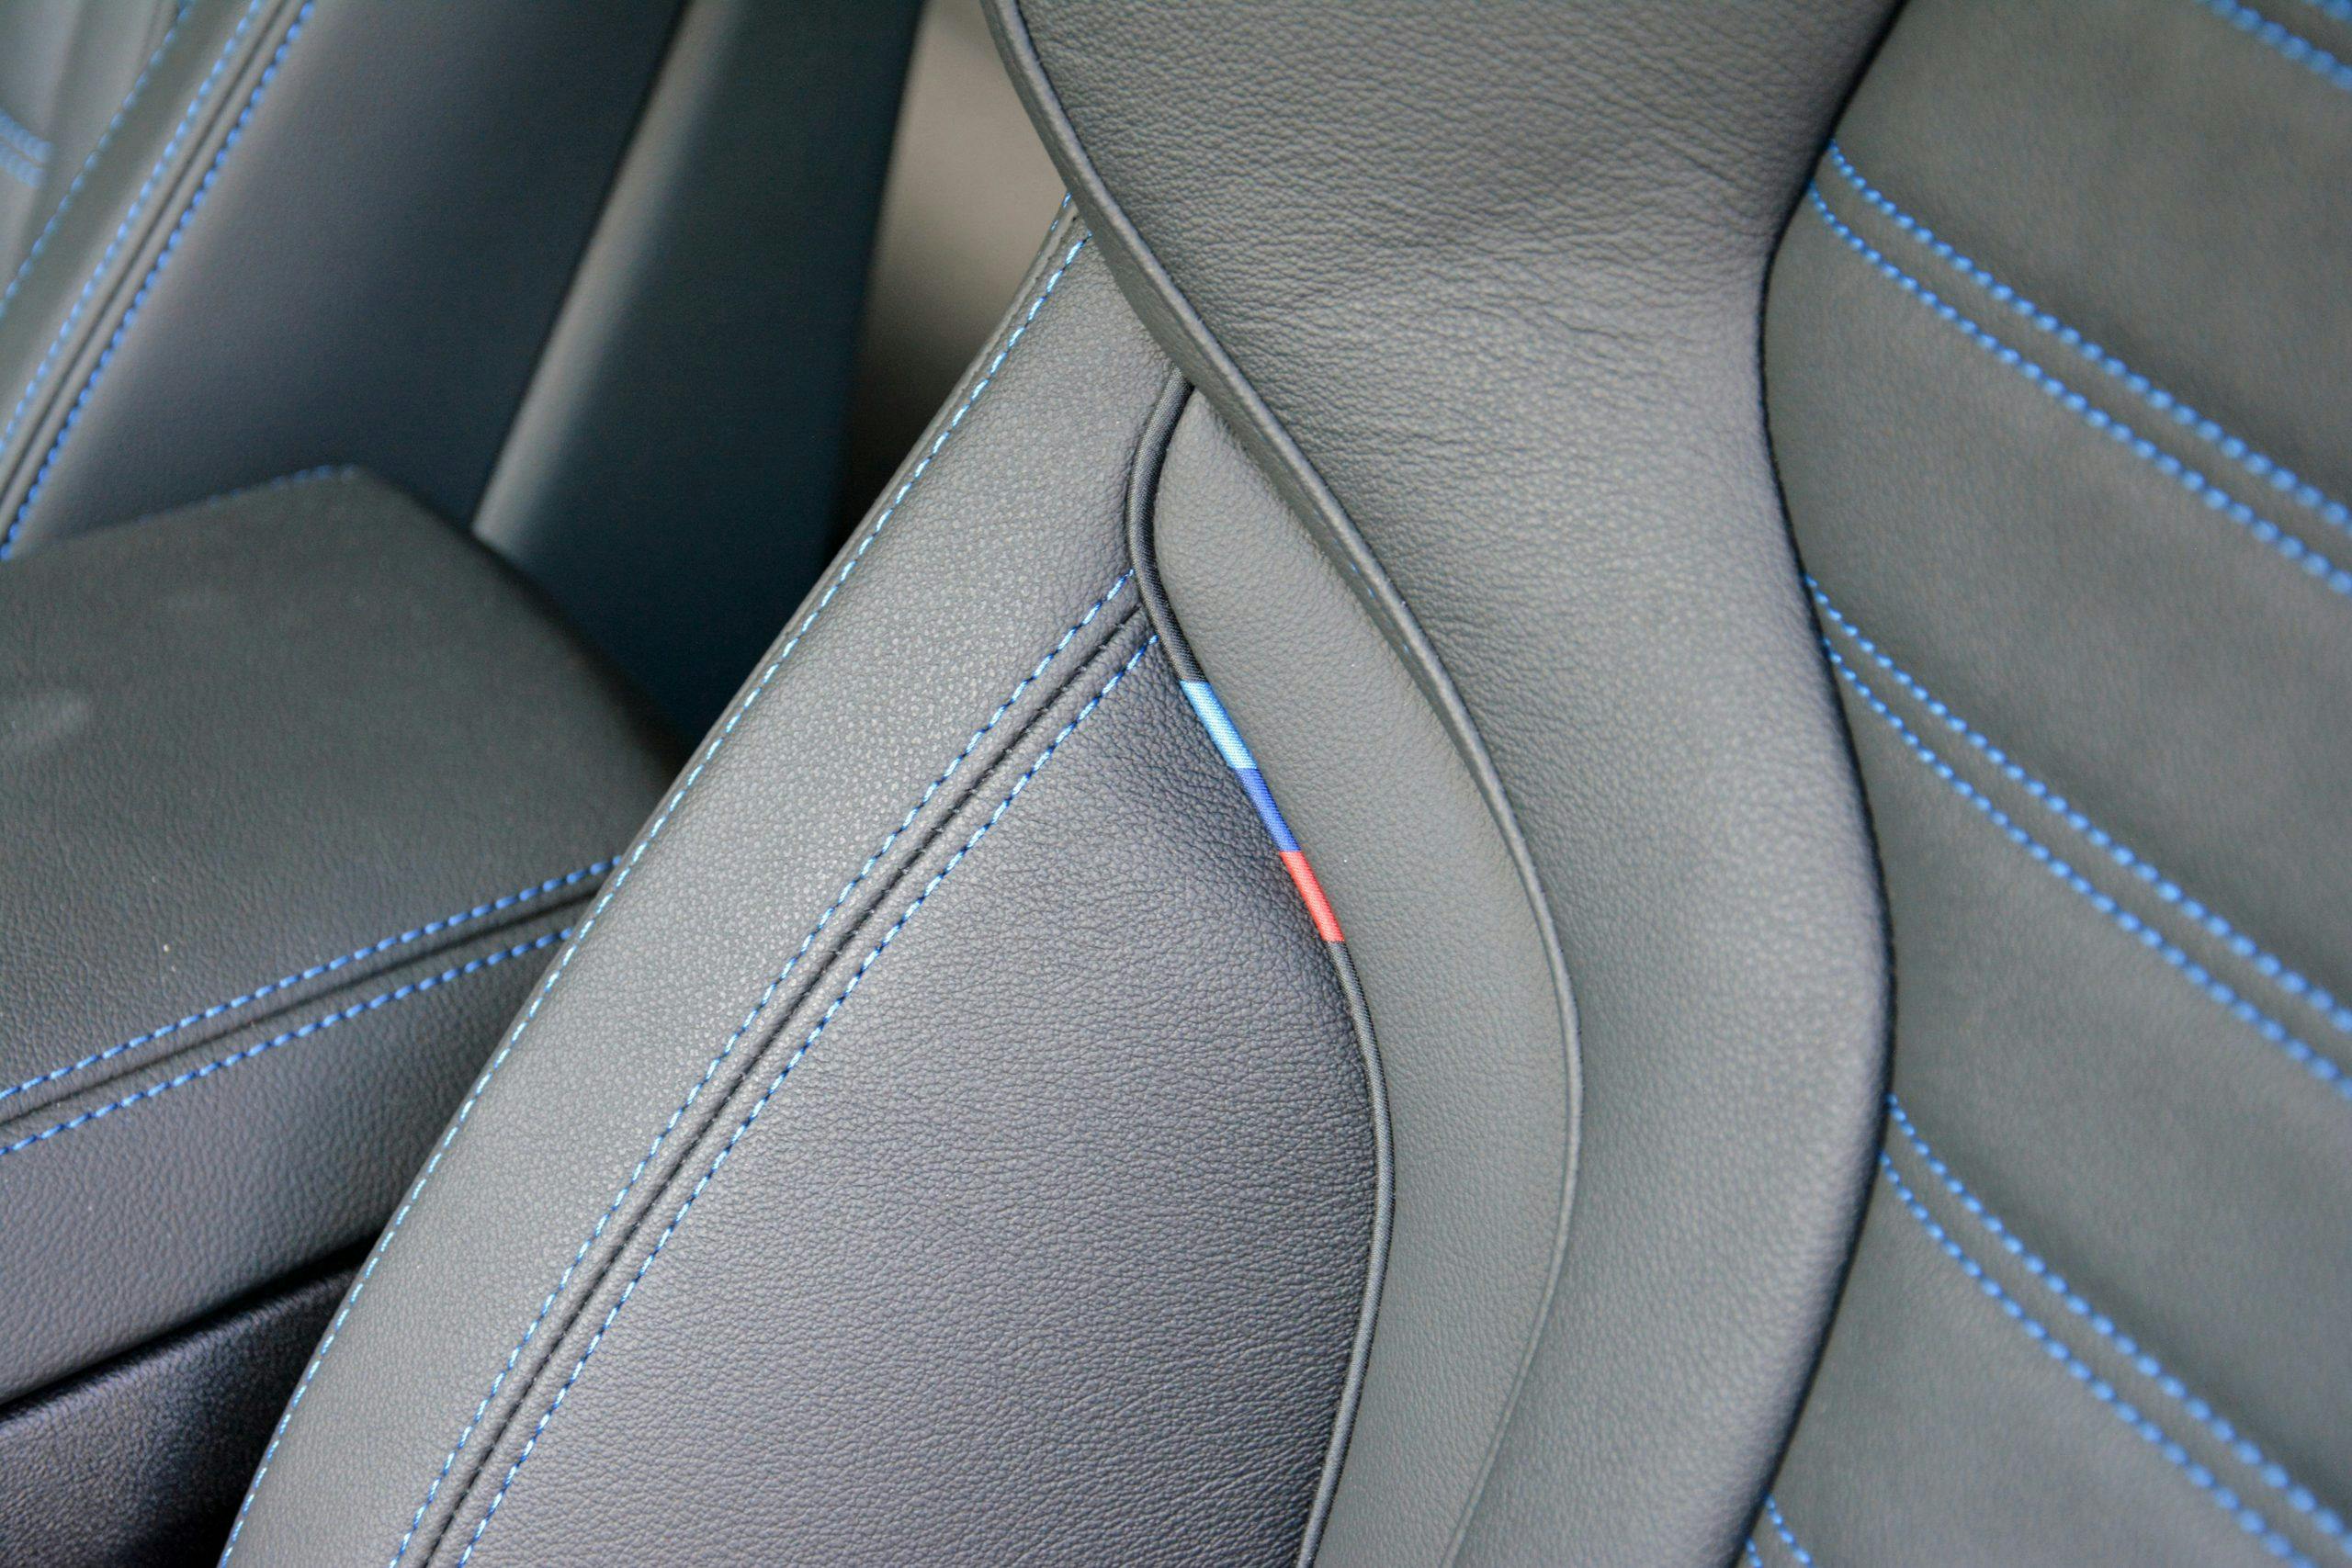 2022 BMW i4 M50 interior leather seat stitching detail